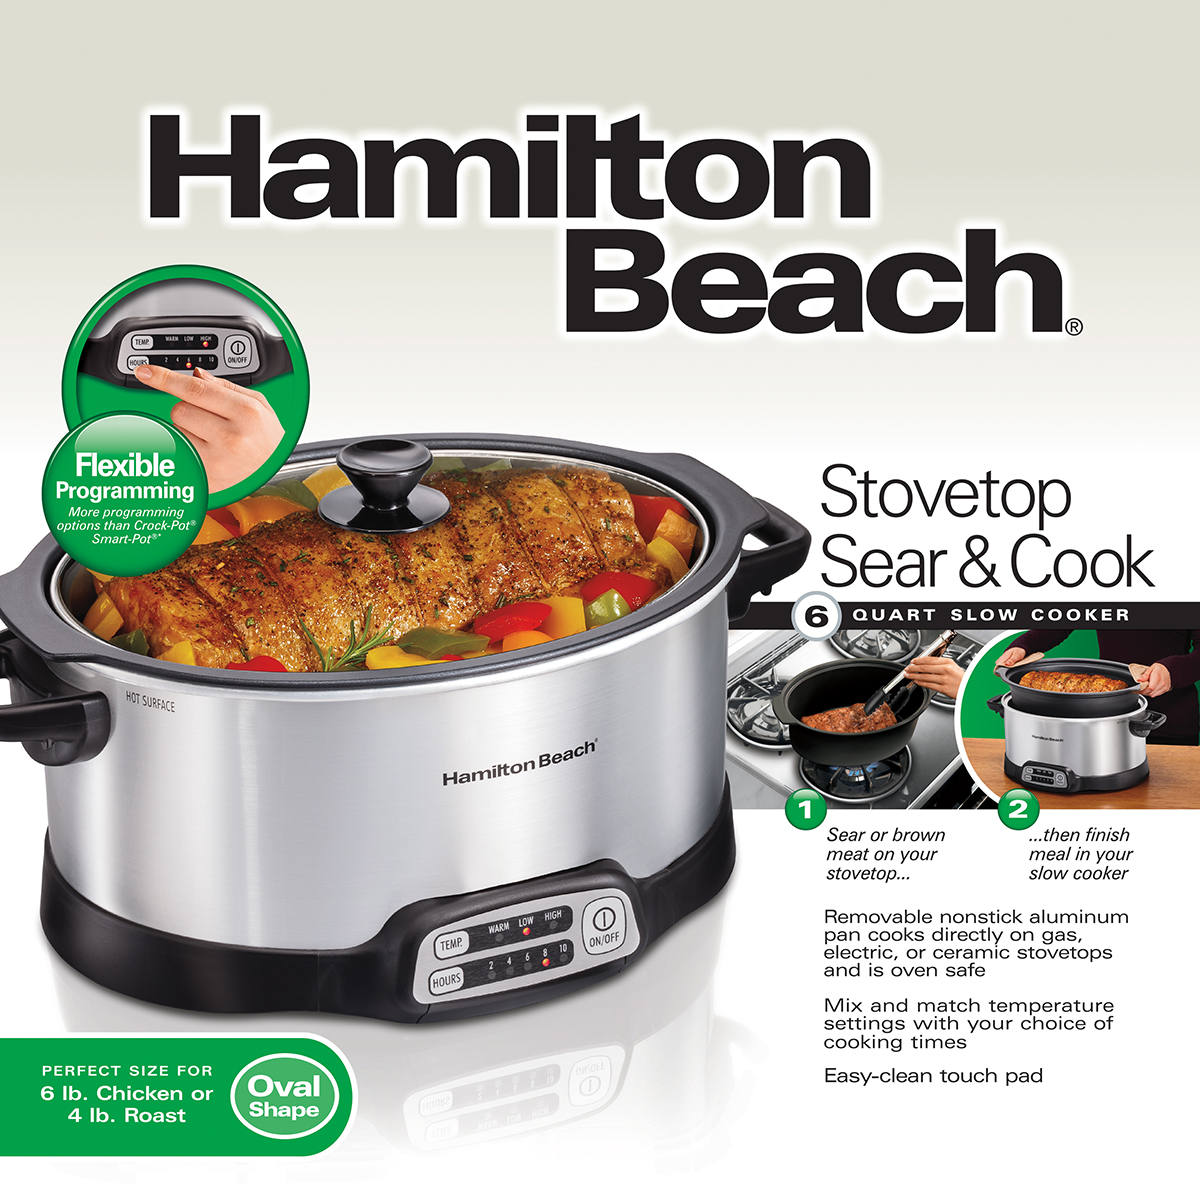 Hamilton Beach 4-Quart Slow Cooker